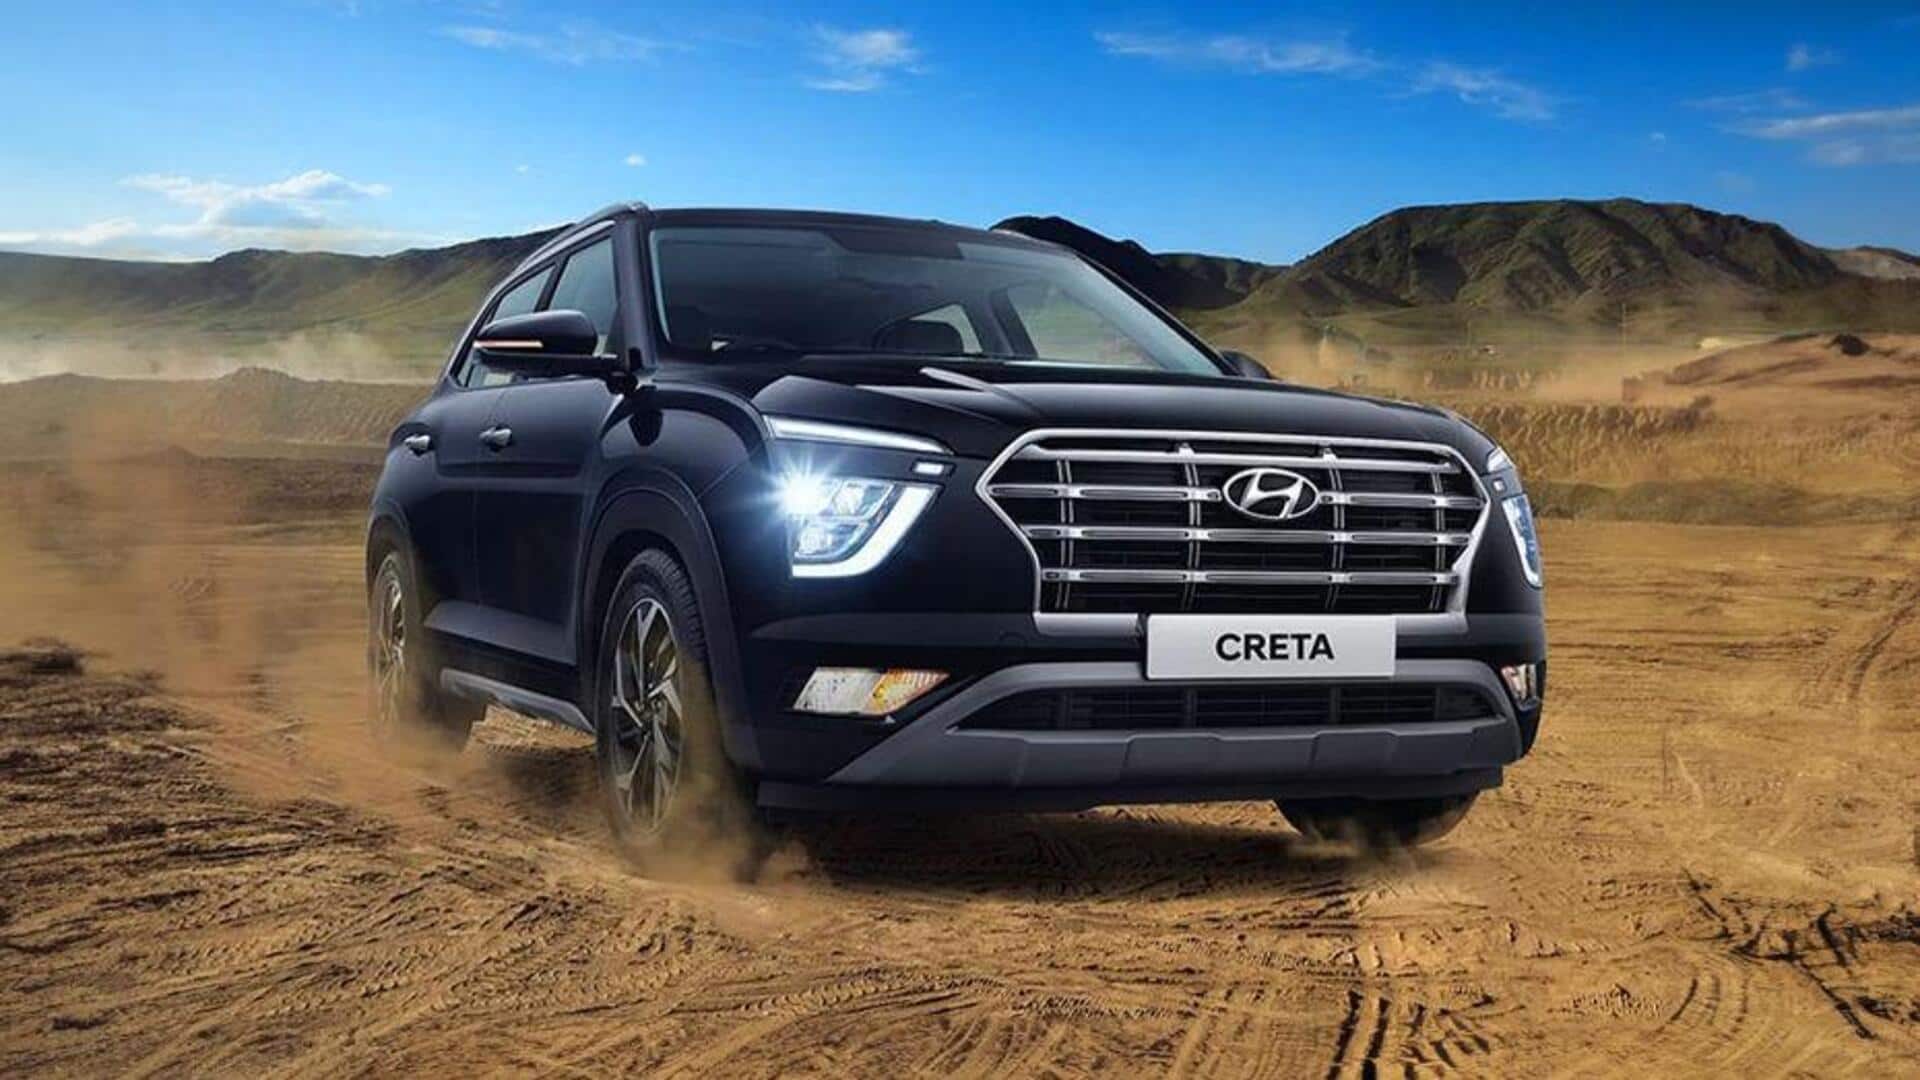 Hyundai CRETA EV will offer 45kWh battery pack, 138hp power